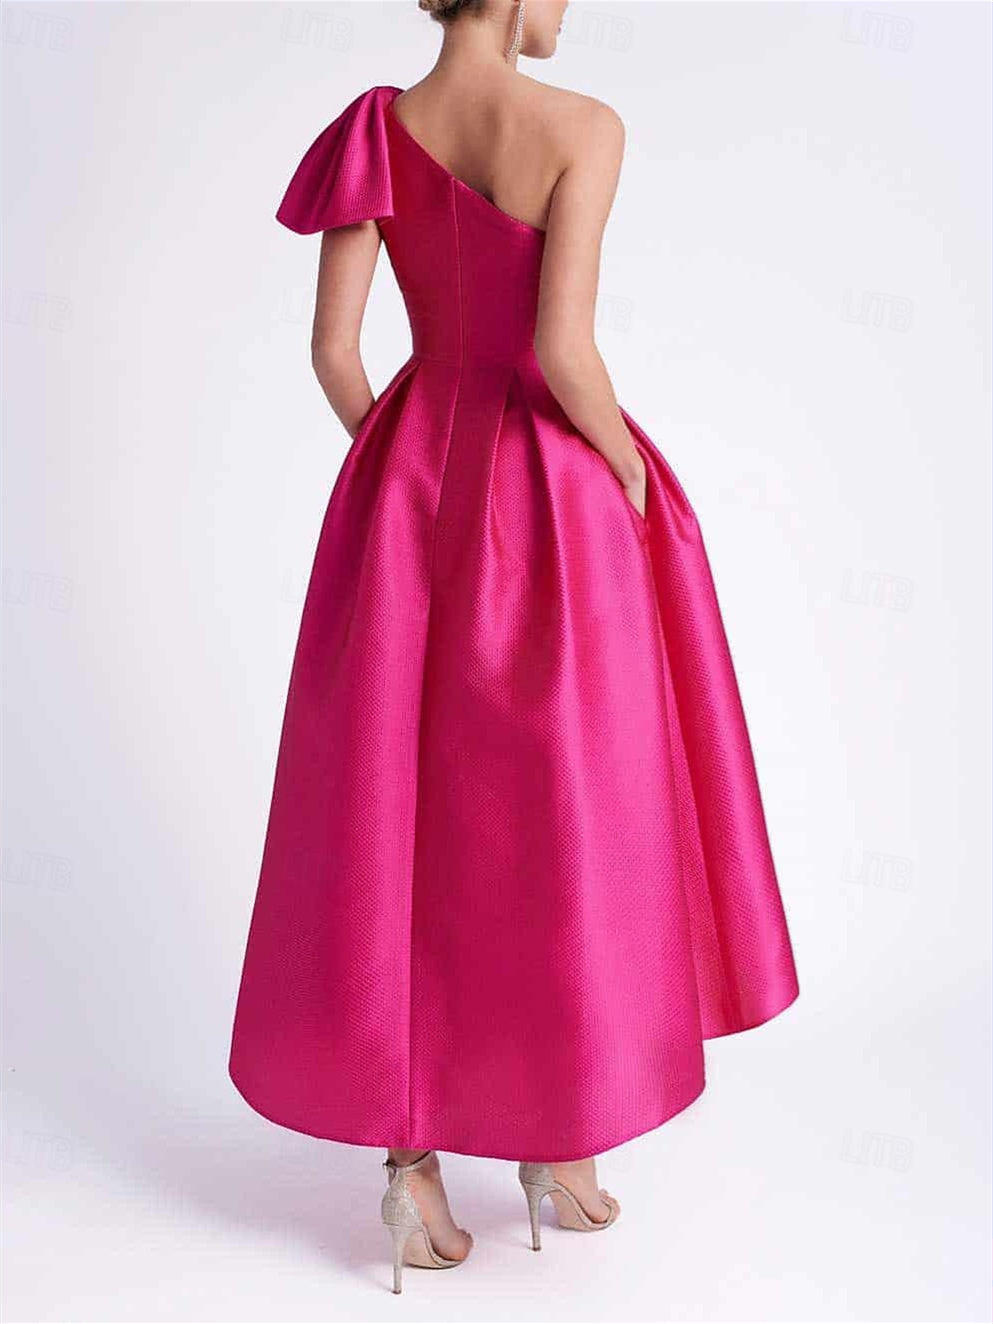 A-Line/Princess One Shoulder Sleeveless Tea-Length Cocktail Dresses With Pocket